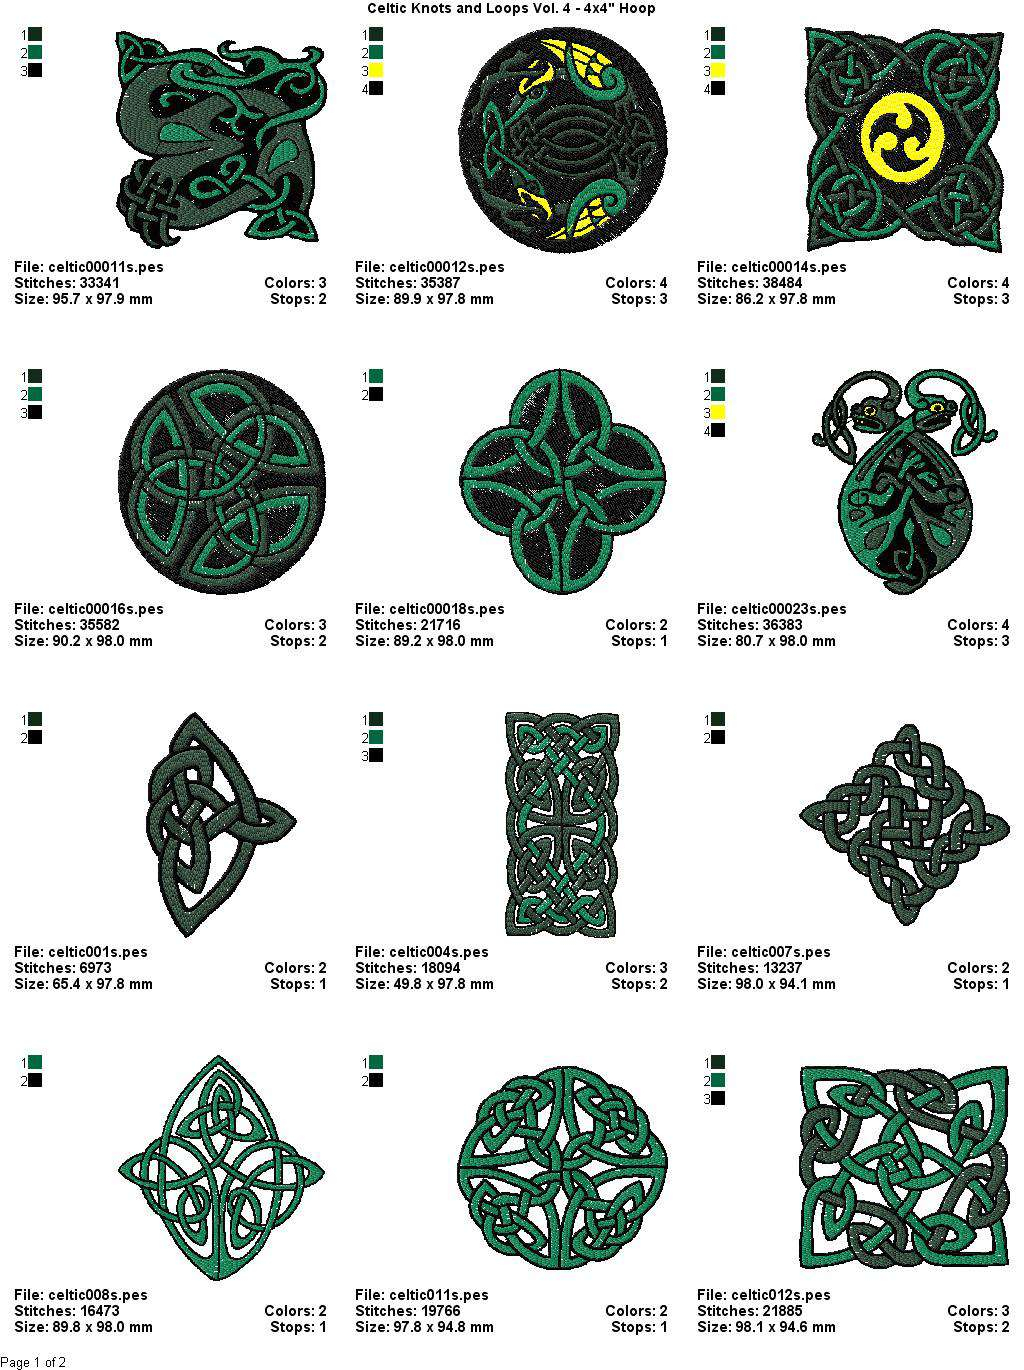 Irish Embroidery Patterns Linaria Dalmatica Designs Celtic Knots And Loops Vol 4 4x4